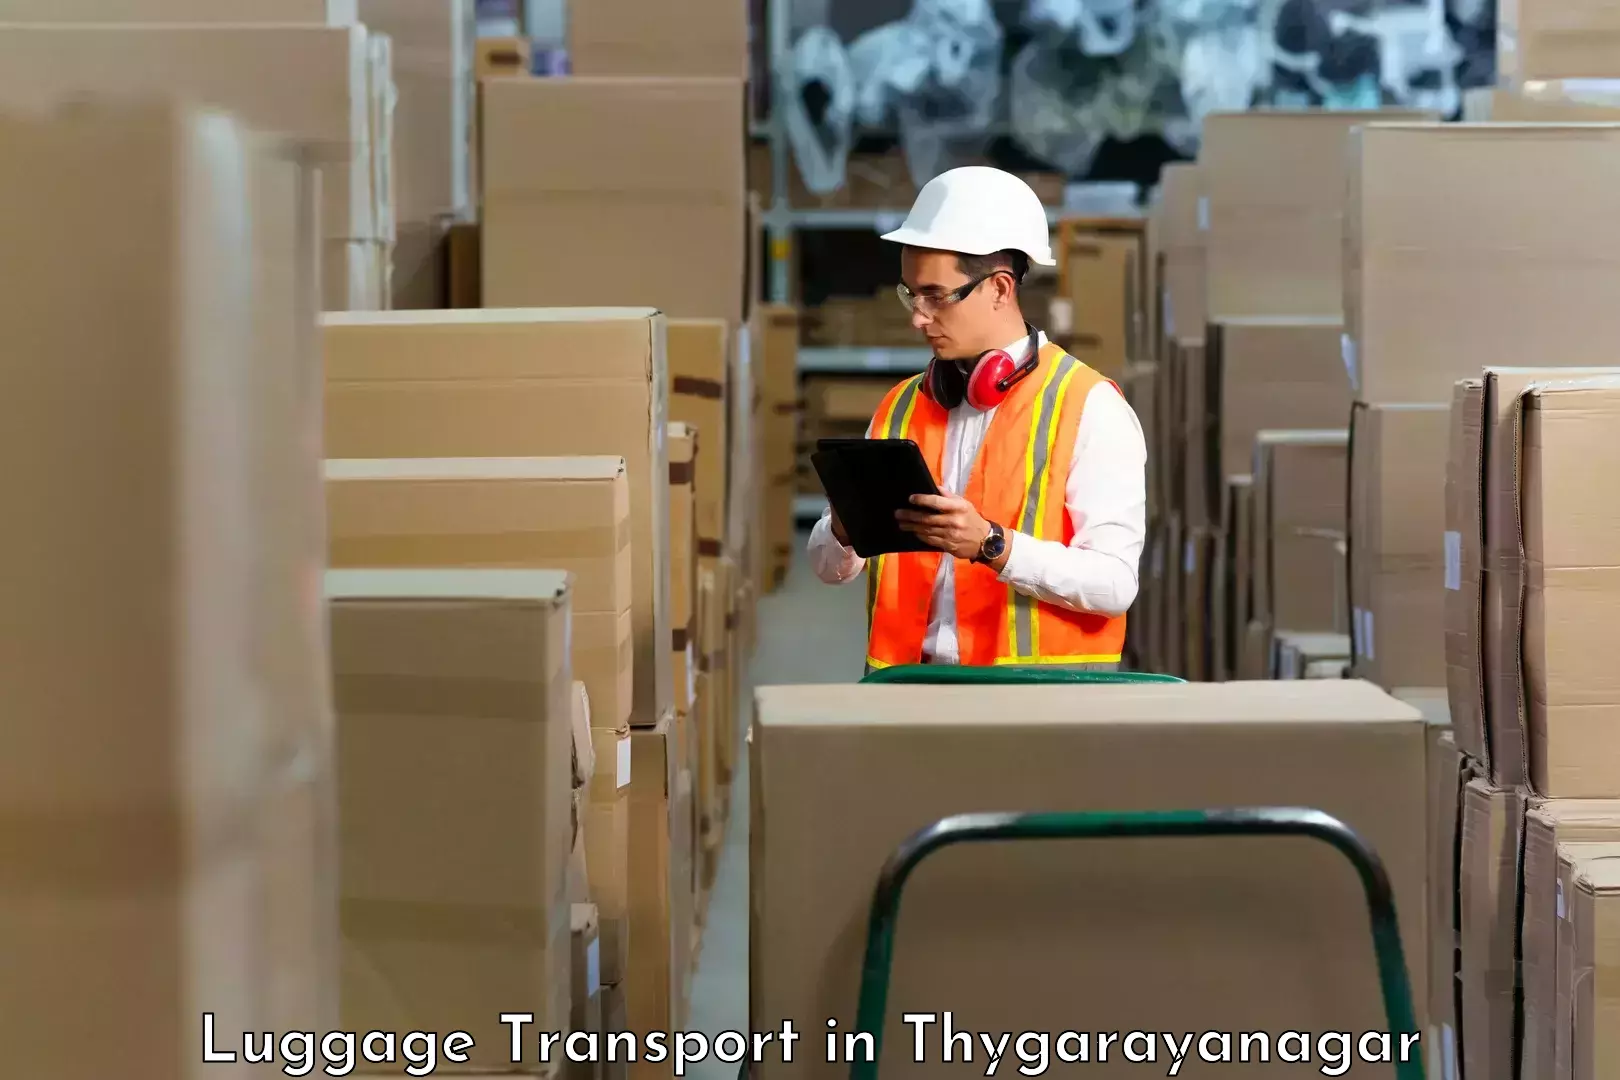 Baggage relocation service in Thygarayanagar